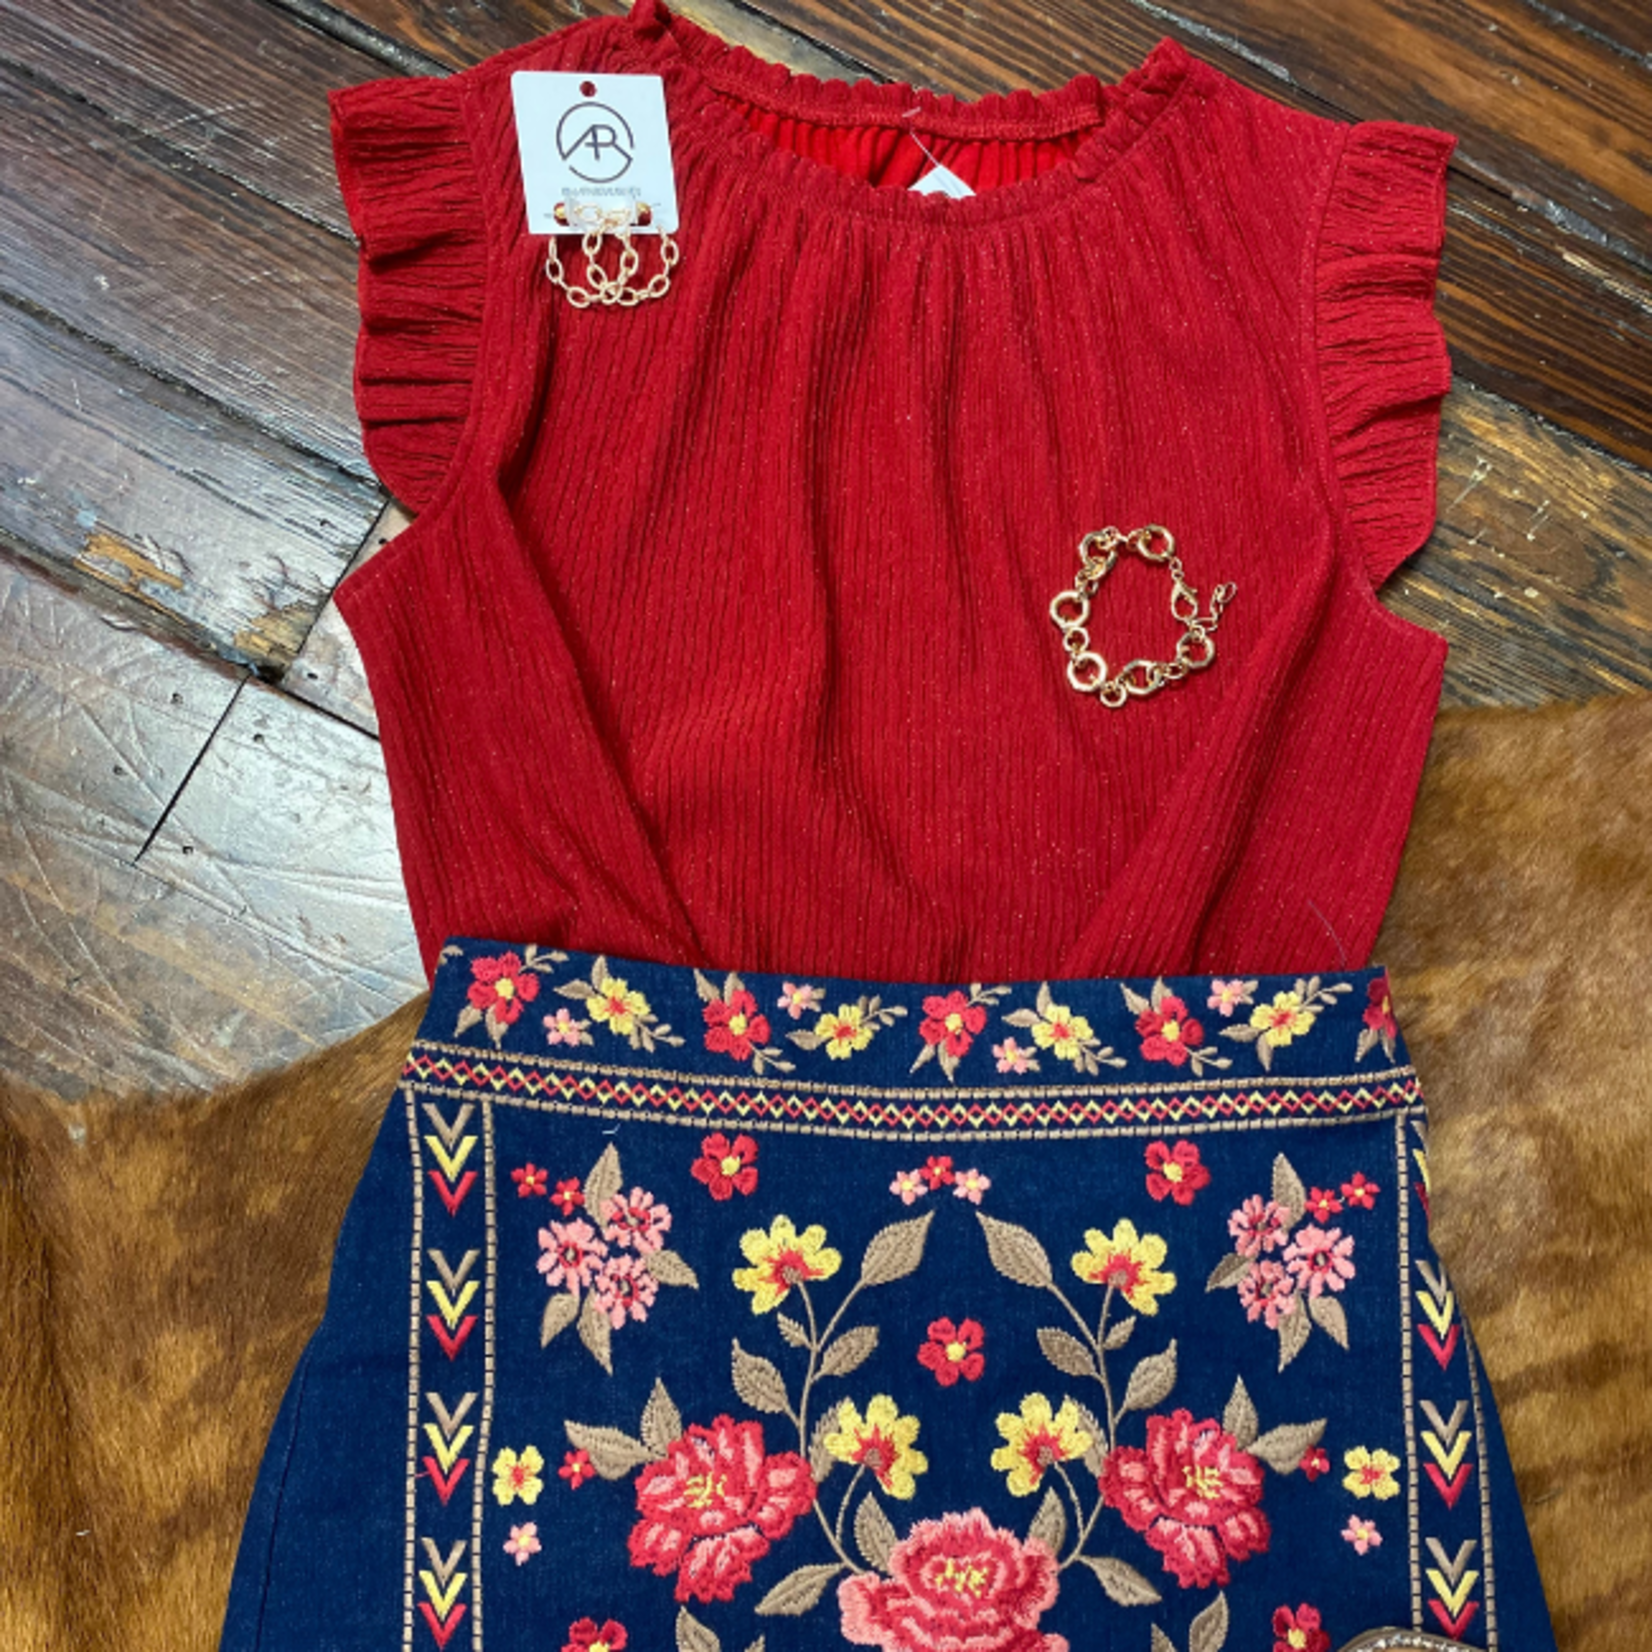 Savanna Jane Embroidered Denim Skirt